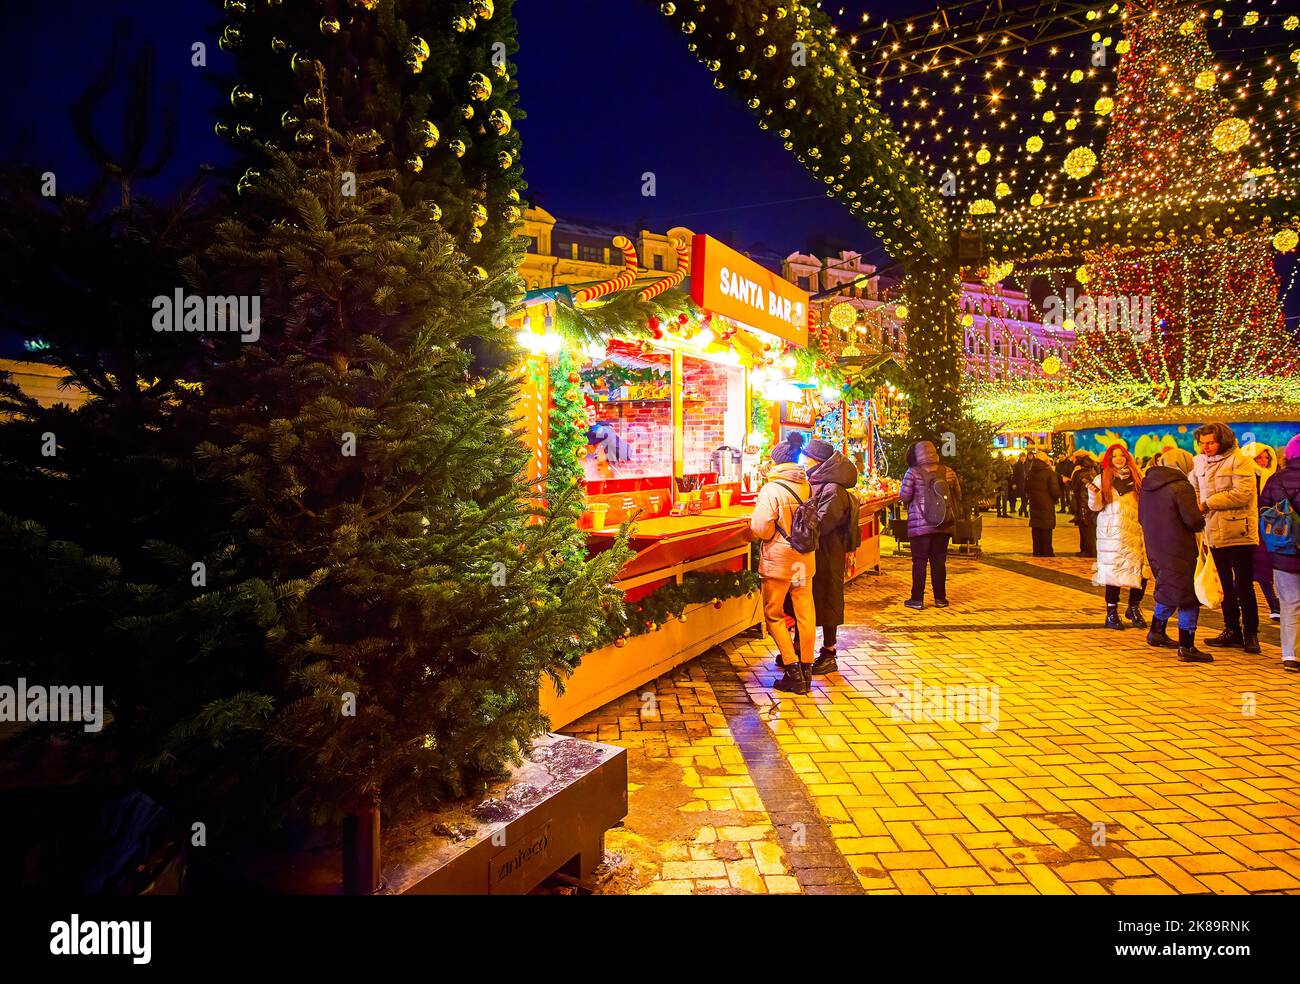 KIEV, UCRANIA - 28 DE DICIEMBRE de 2021: La barra de bebidas al aire libre y puerta decorativa de la Feria de Navidad, Sophia Square, el 28 de diciembre en Kiev, Ucrania Foto de stock